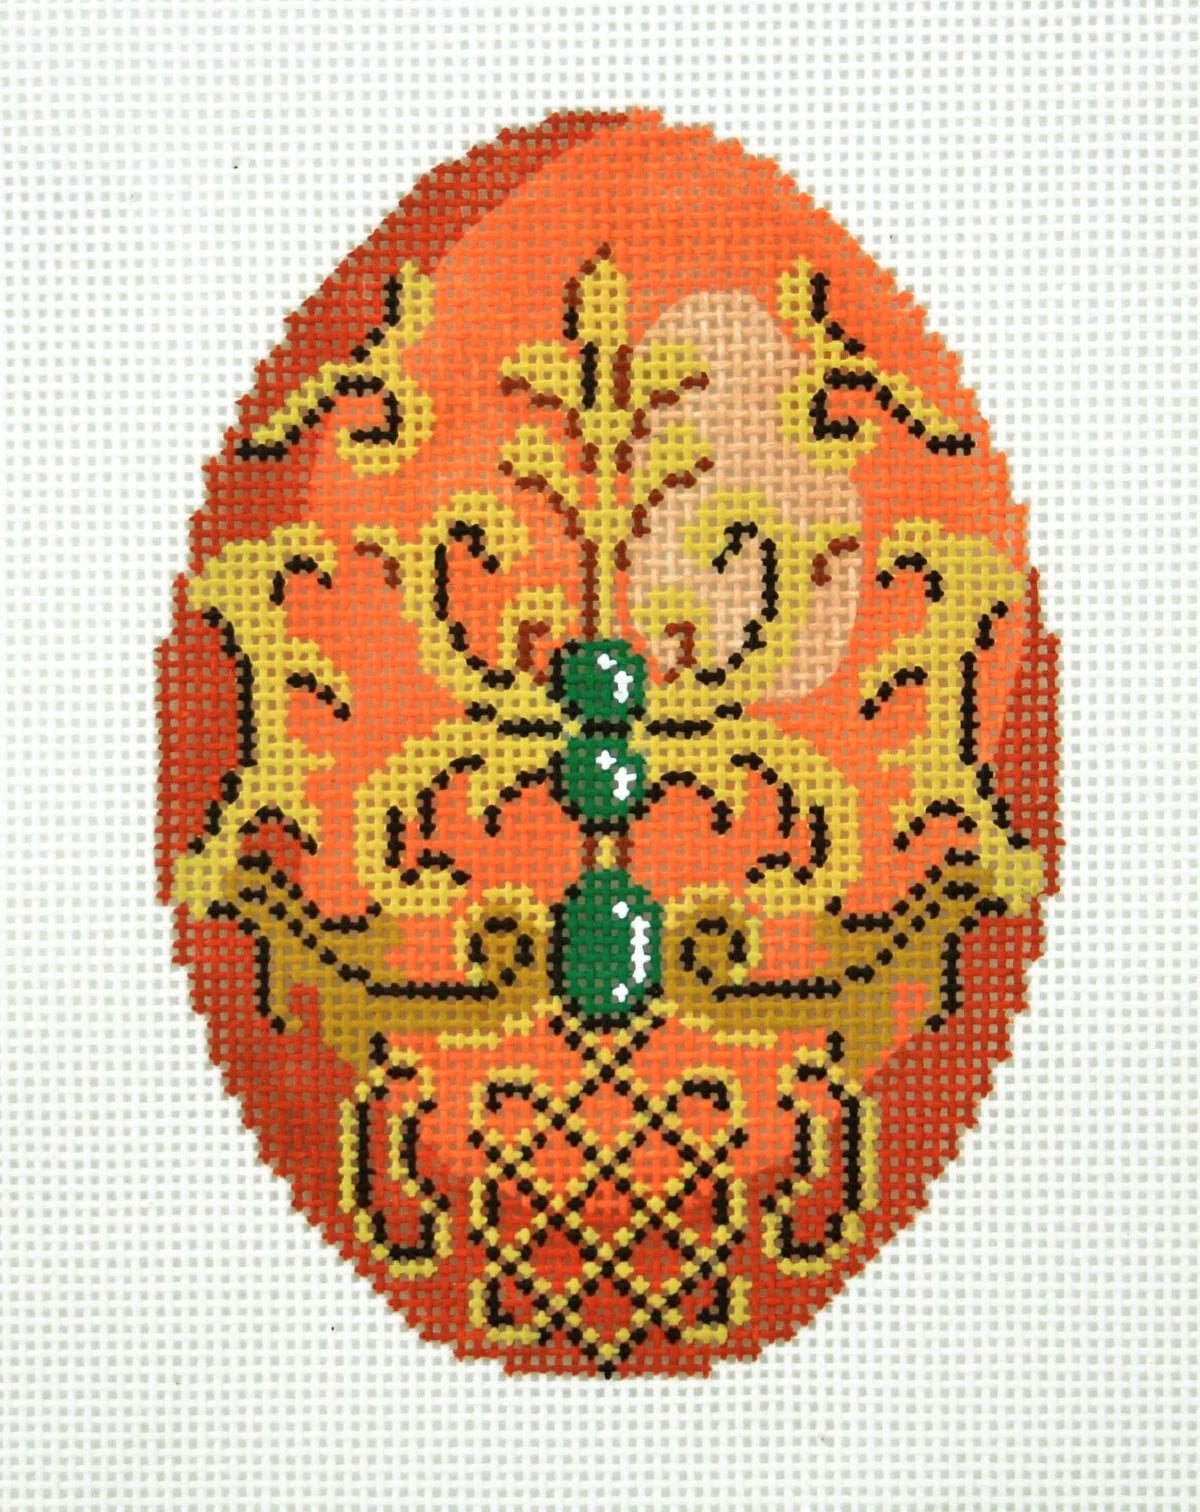 XM498 - Faberge Egg - Green Jewels on Orange